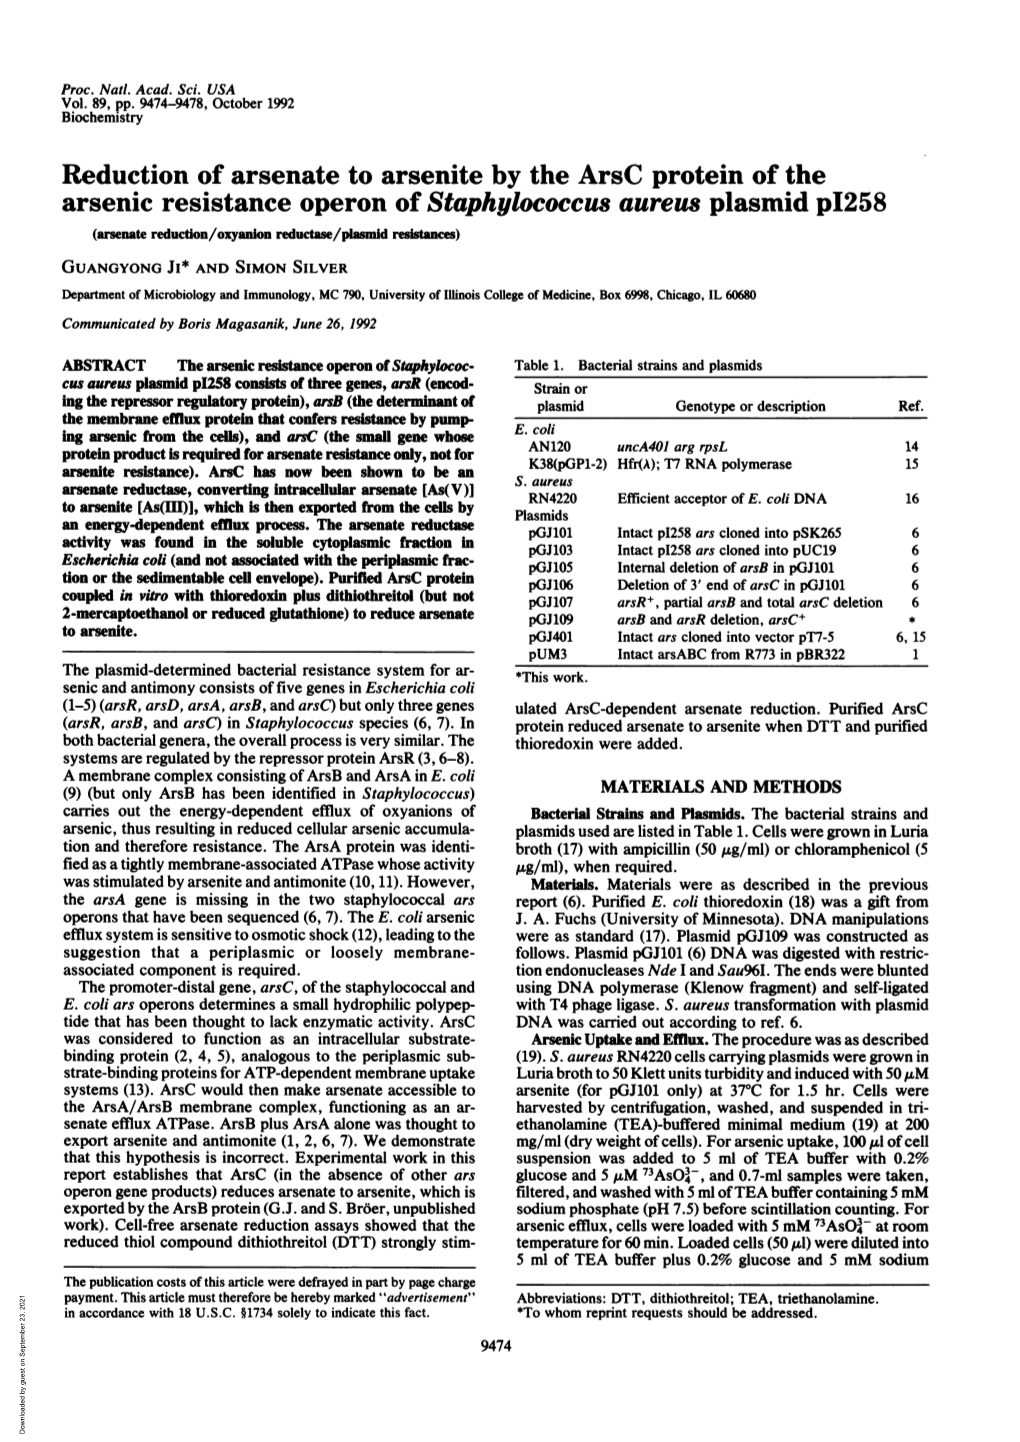 Arsenic Resistance Operon of Staphylococcus Aureus Plasmid